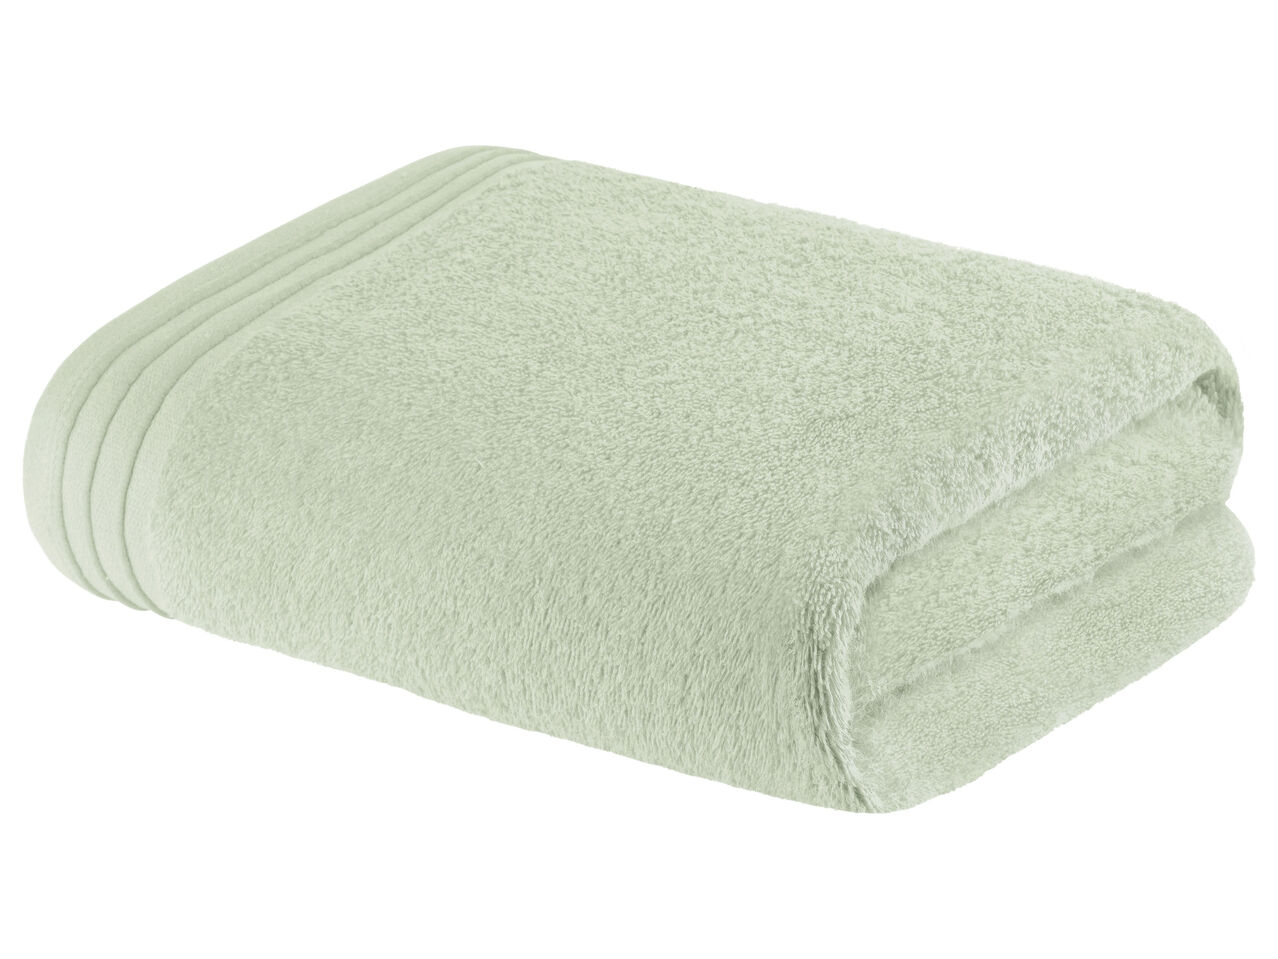 LIVARNO HOME® Ręczniki frotté 70 x 140 cm , cena 19,99 PLN 
LIVARNO HOME® Ręczniki ...